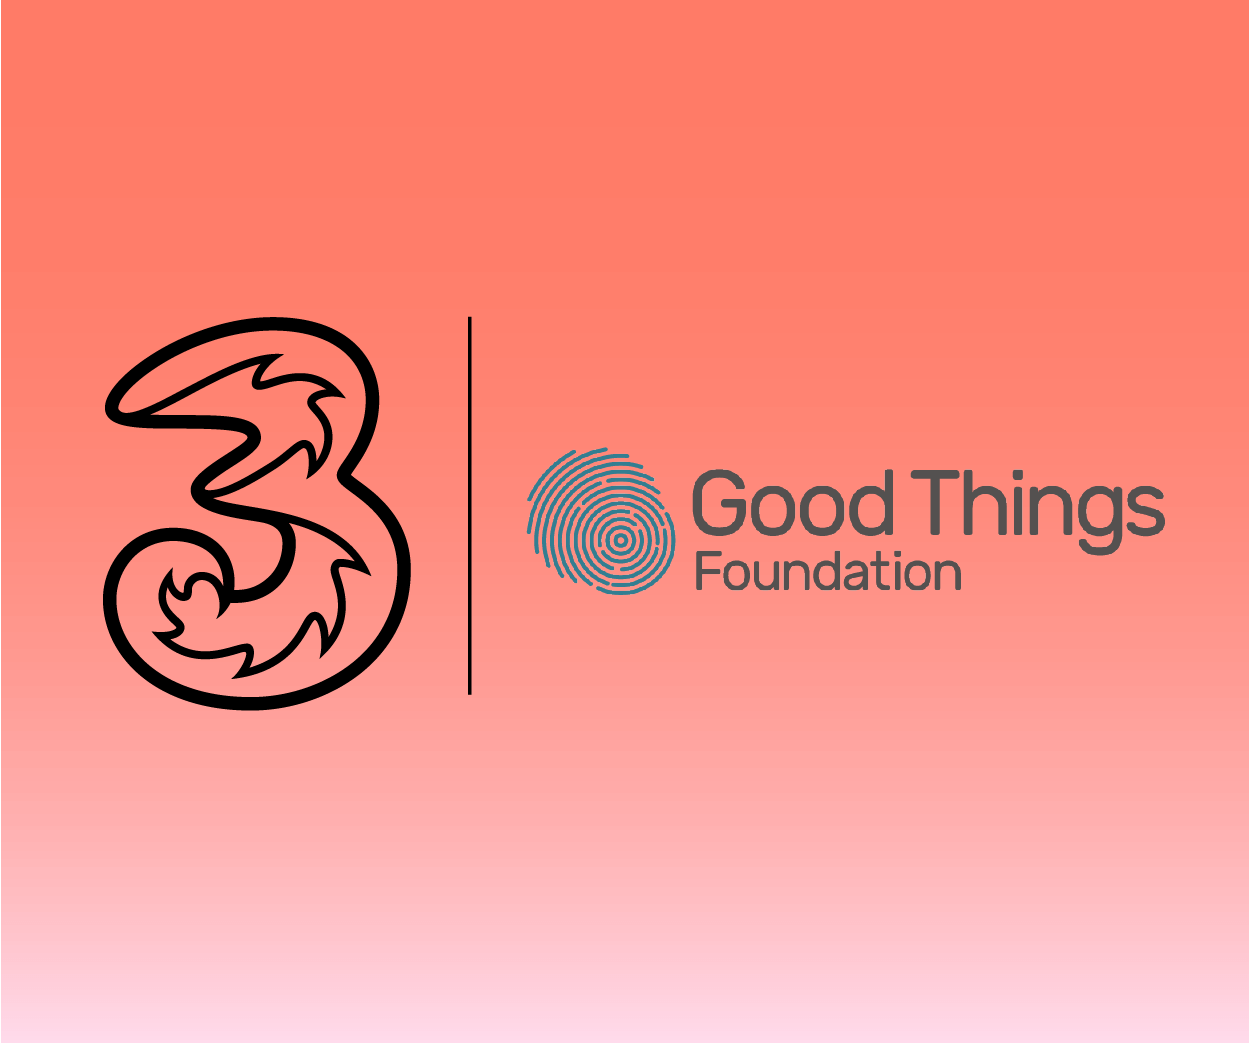 Three logo and Good Things Foundation logo